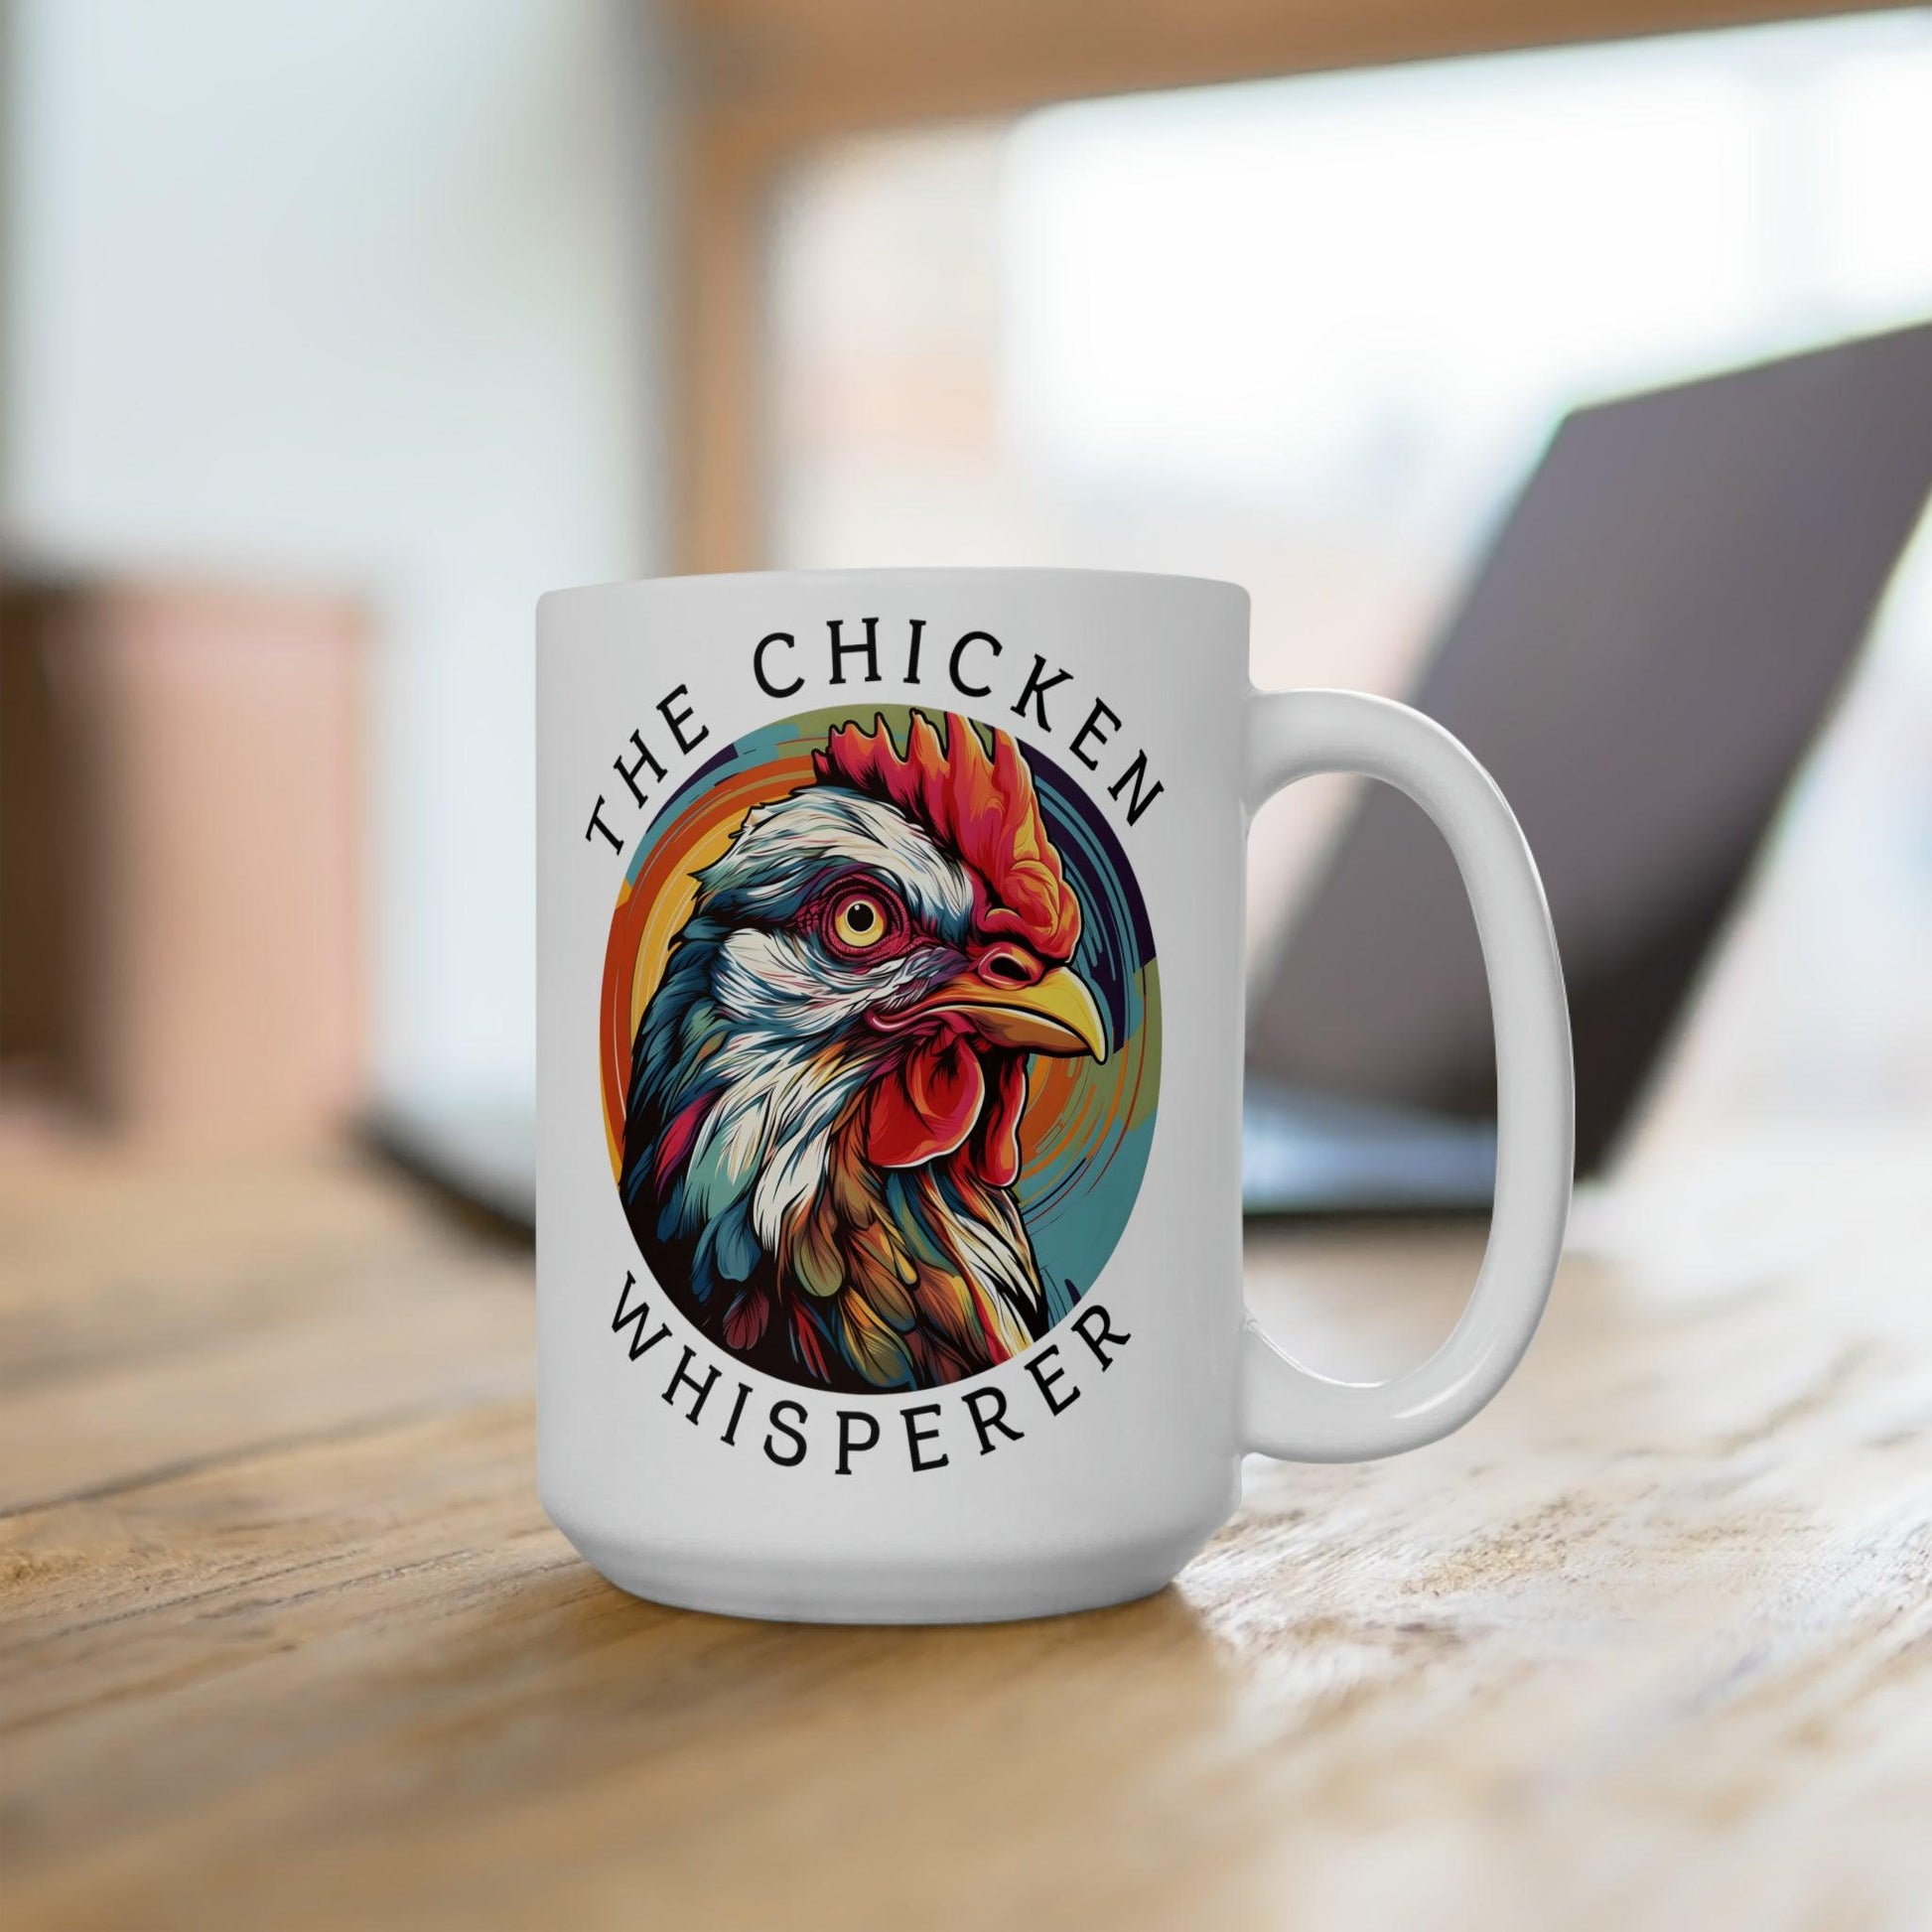 The Chicken Whisperer Mug Chicken Coffee Mug, Chicken lovers Mug Chicken Lover Gift for her, Funny Chicken Cup, Roster Mug Retro Vintage Mug - Giftsmojo